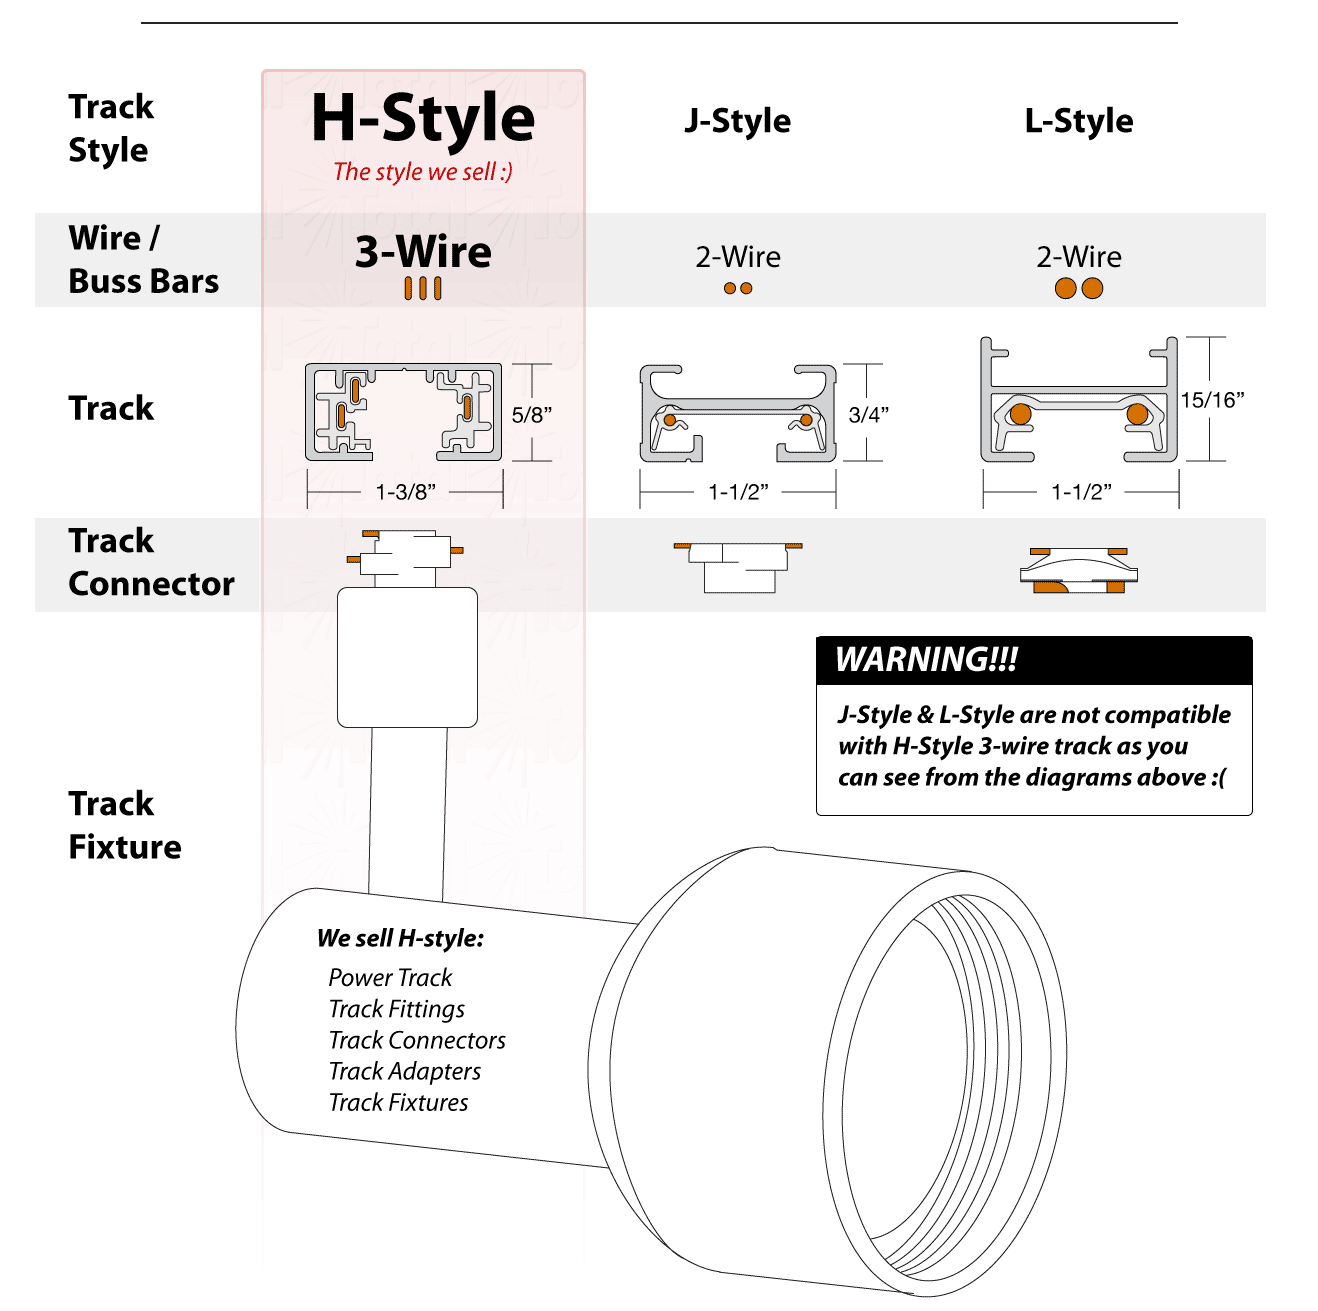 Popular Track Lighting Styles: H-style, J-style, L-style